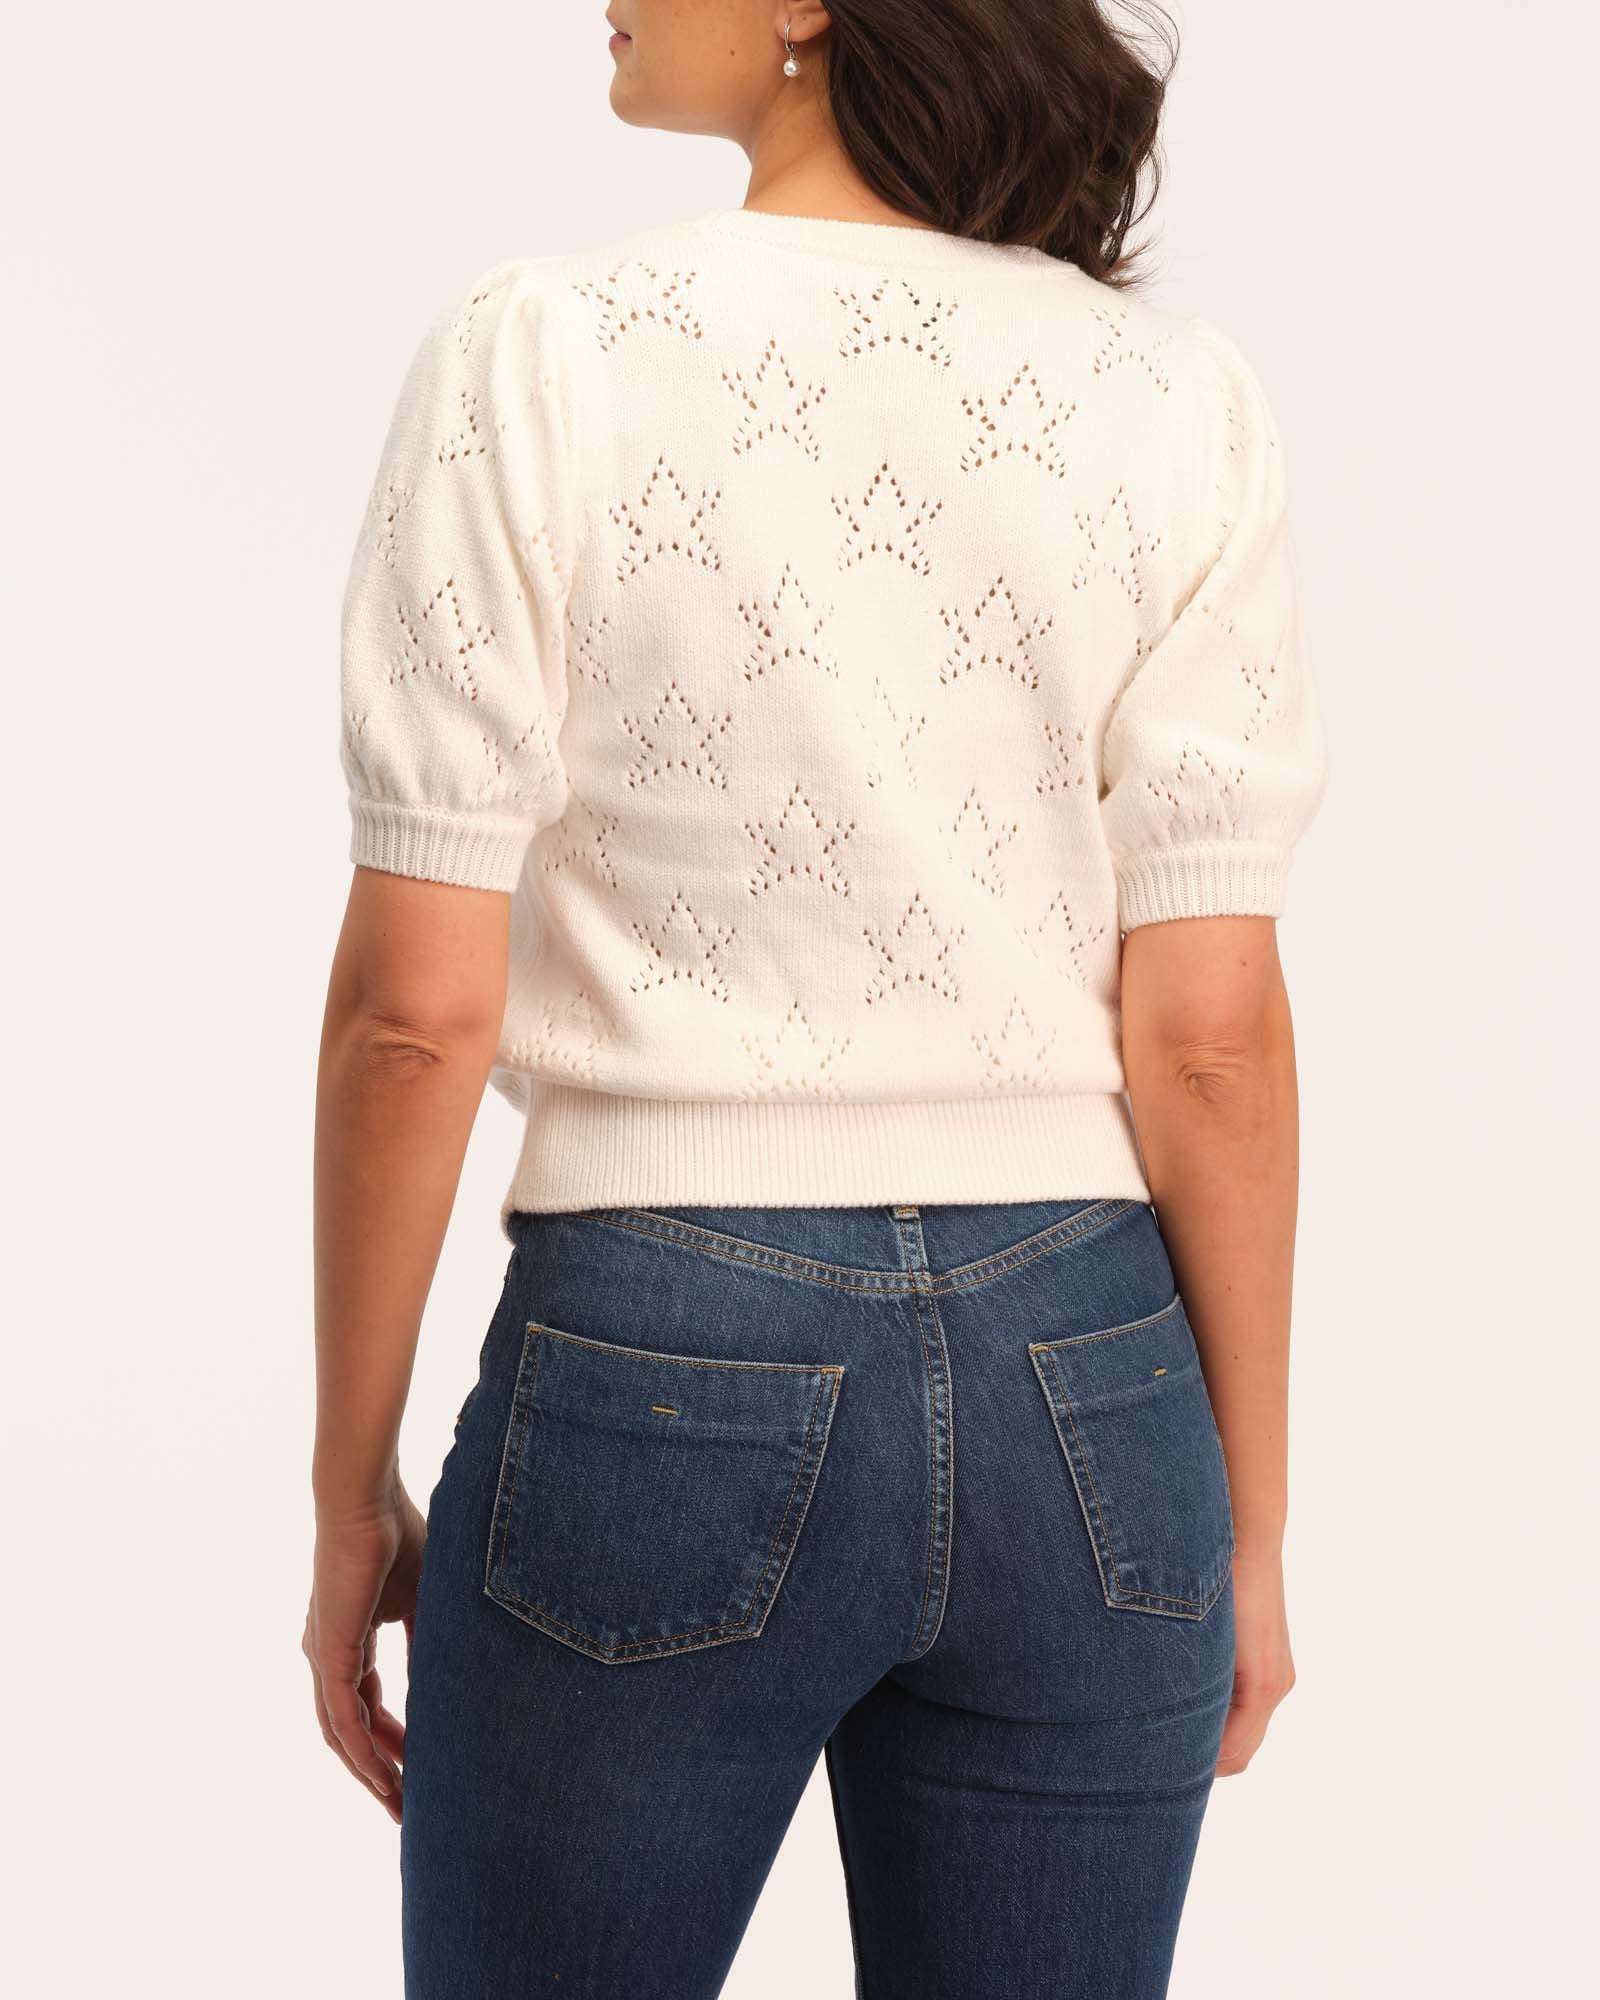 Shop Elie Elie Tahari Women's Cotton Blend Star Knit Sweater | JANE + MERCER